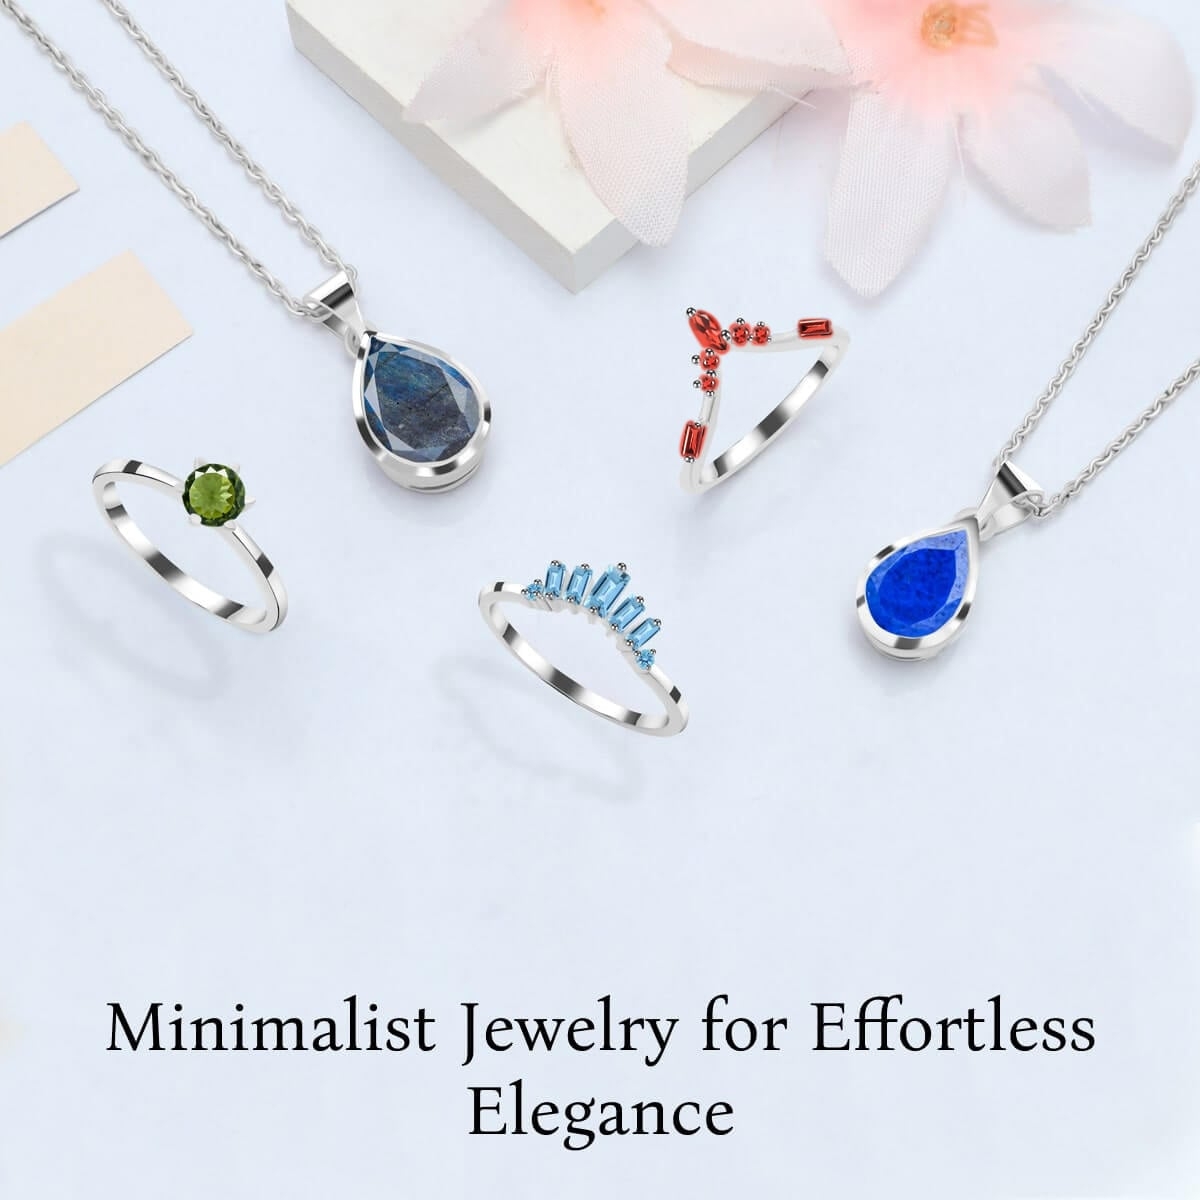 Embracing Minimalist Jewelry in Everyday Fashion